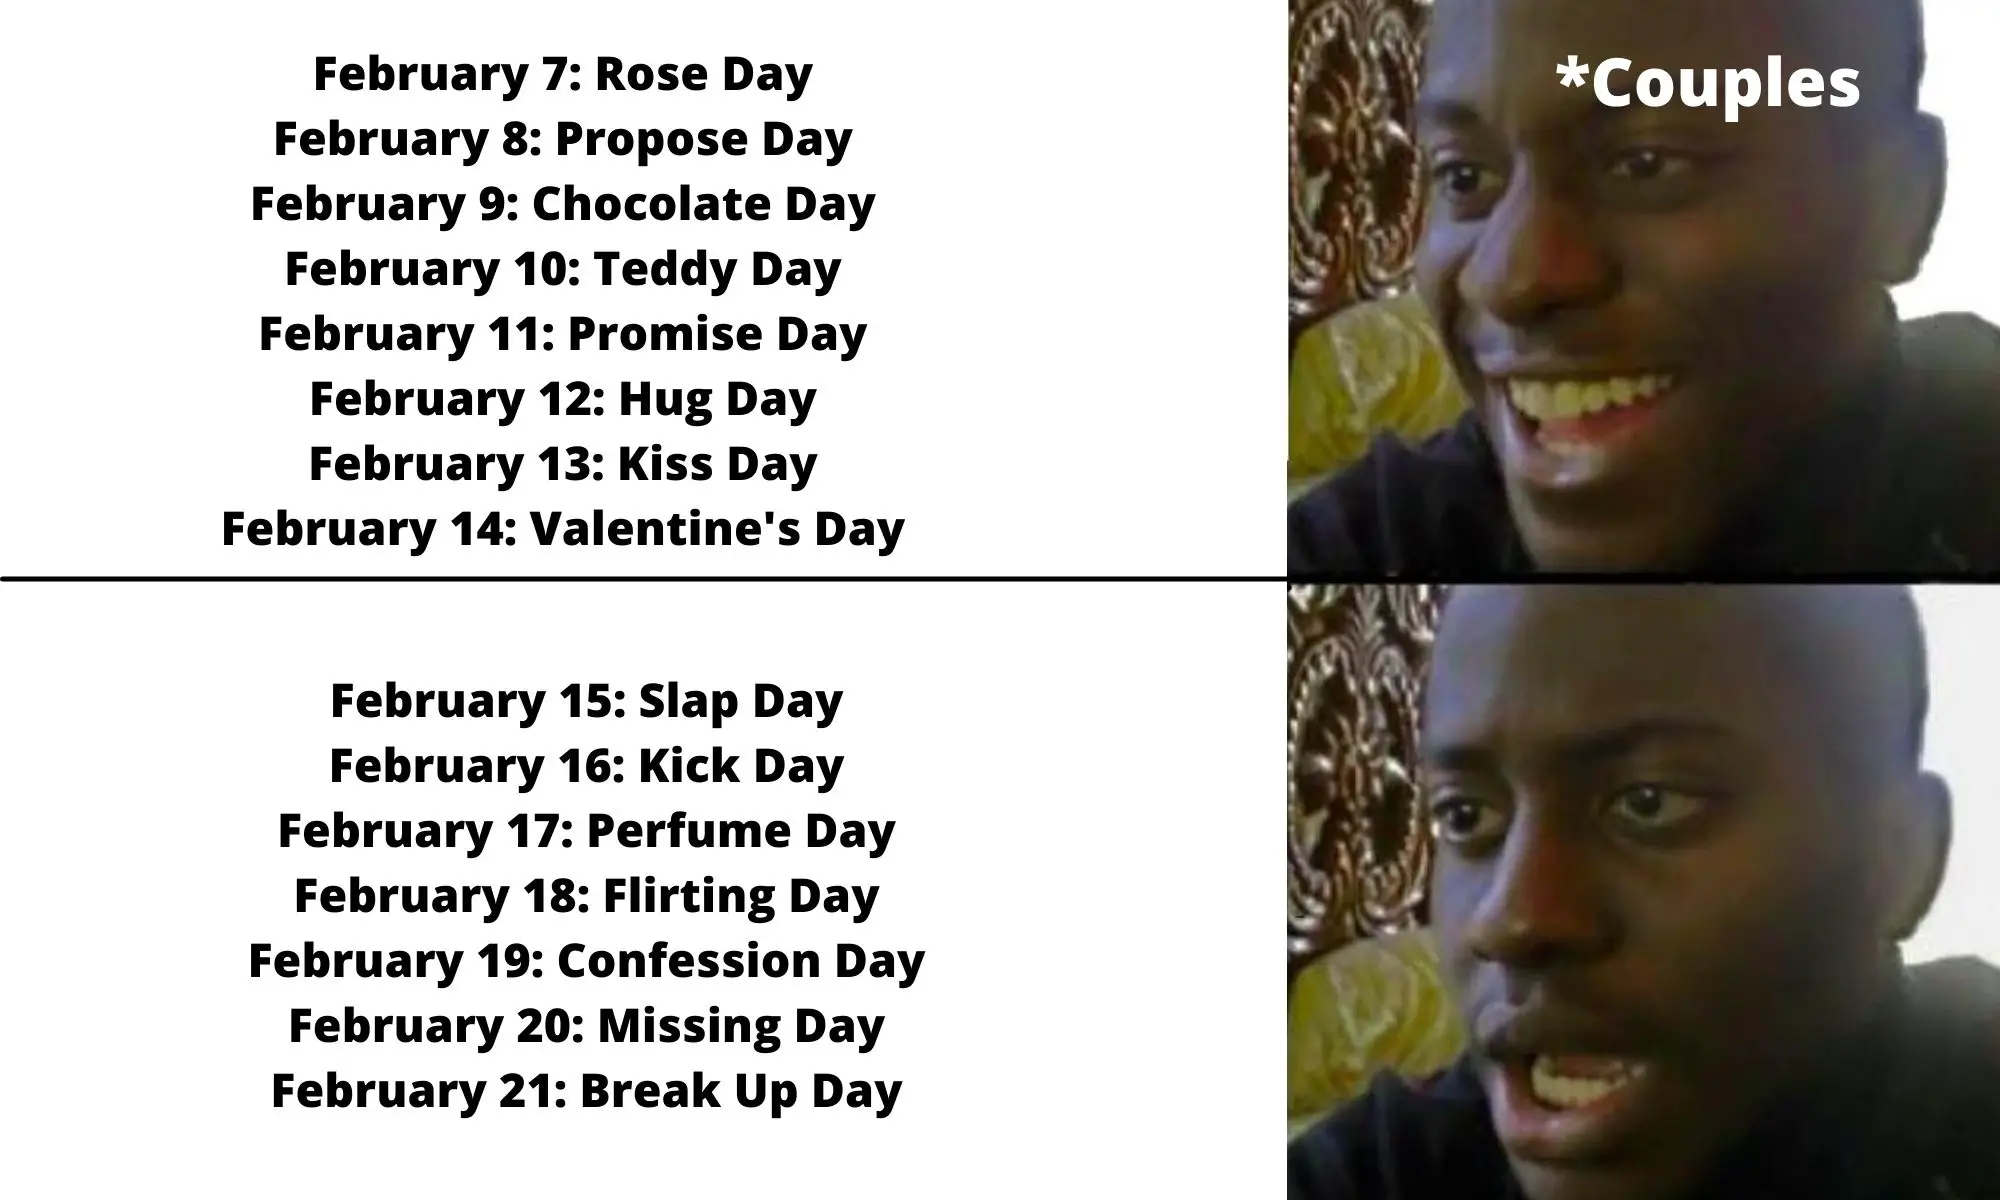 After Valentine Day Meme on Break Up